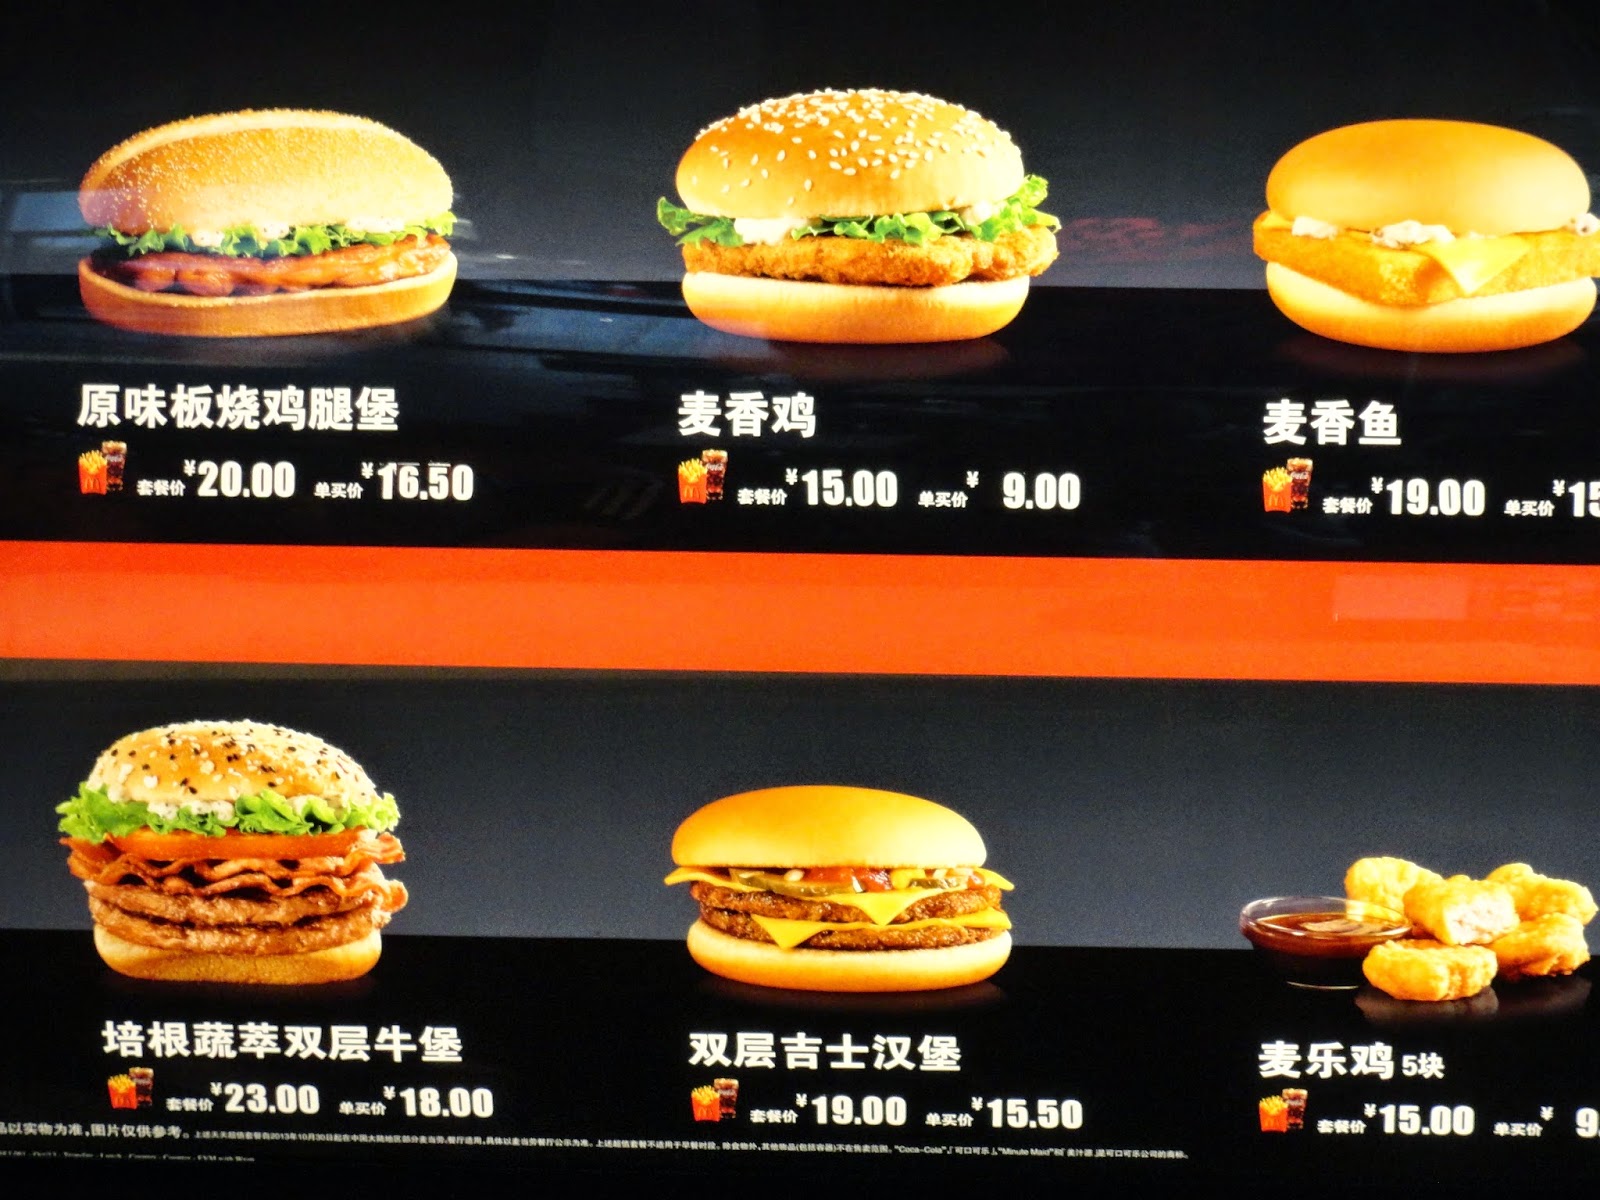 McDonald's Menu in China